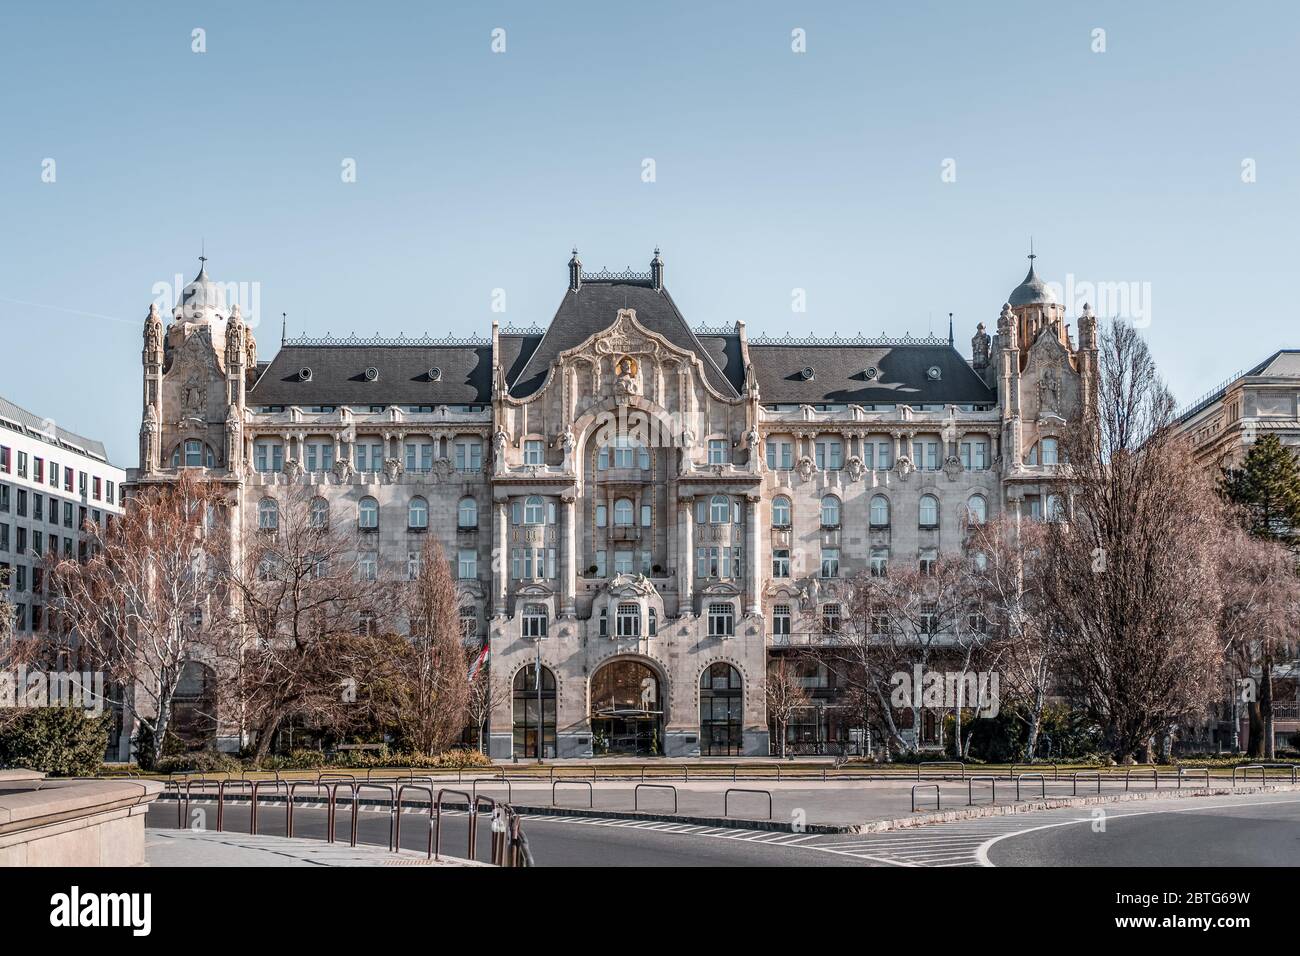 Feb 8, 2020 - Budapest, Hungary: Art Nouveau style Gresham Palace, also Four Seasons Hotel facade Stock Photo